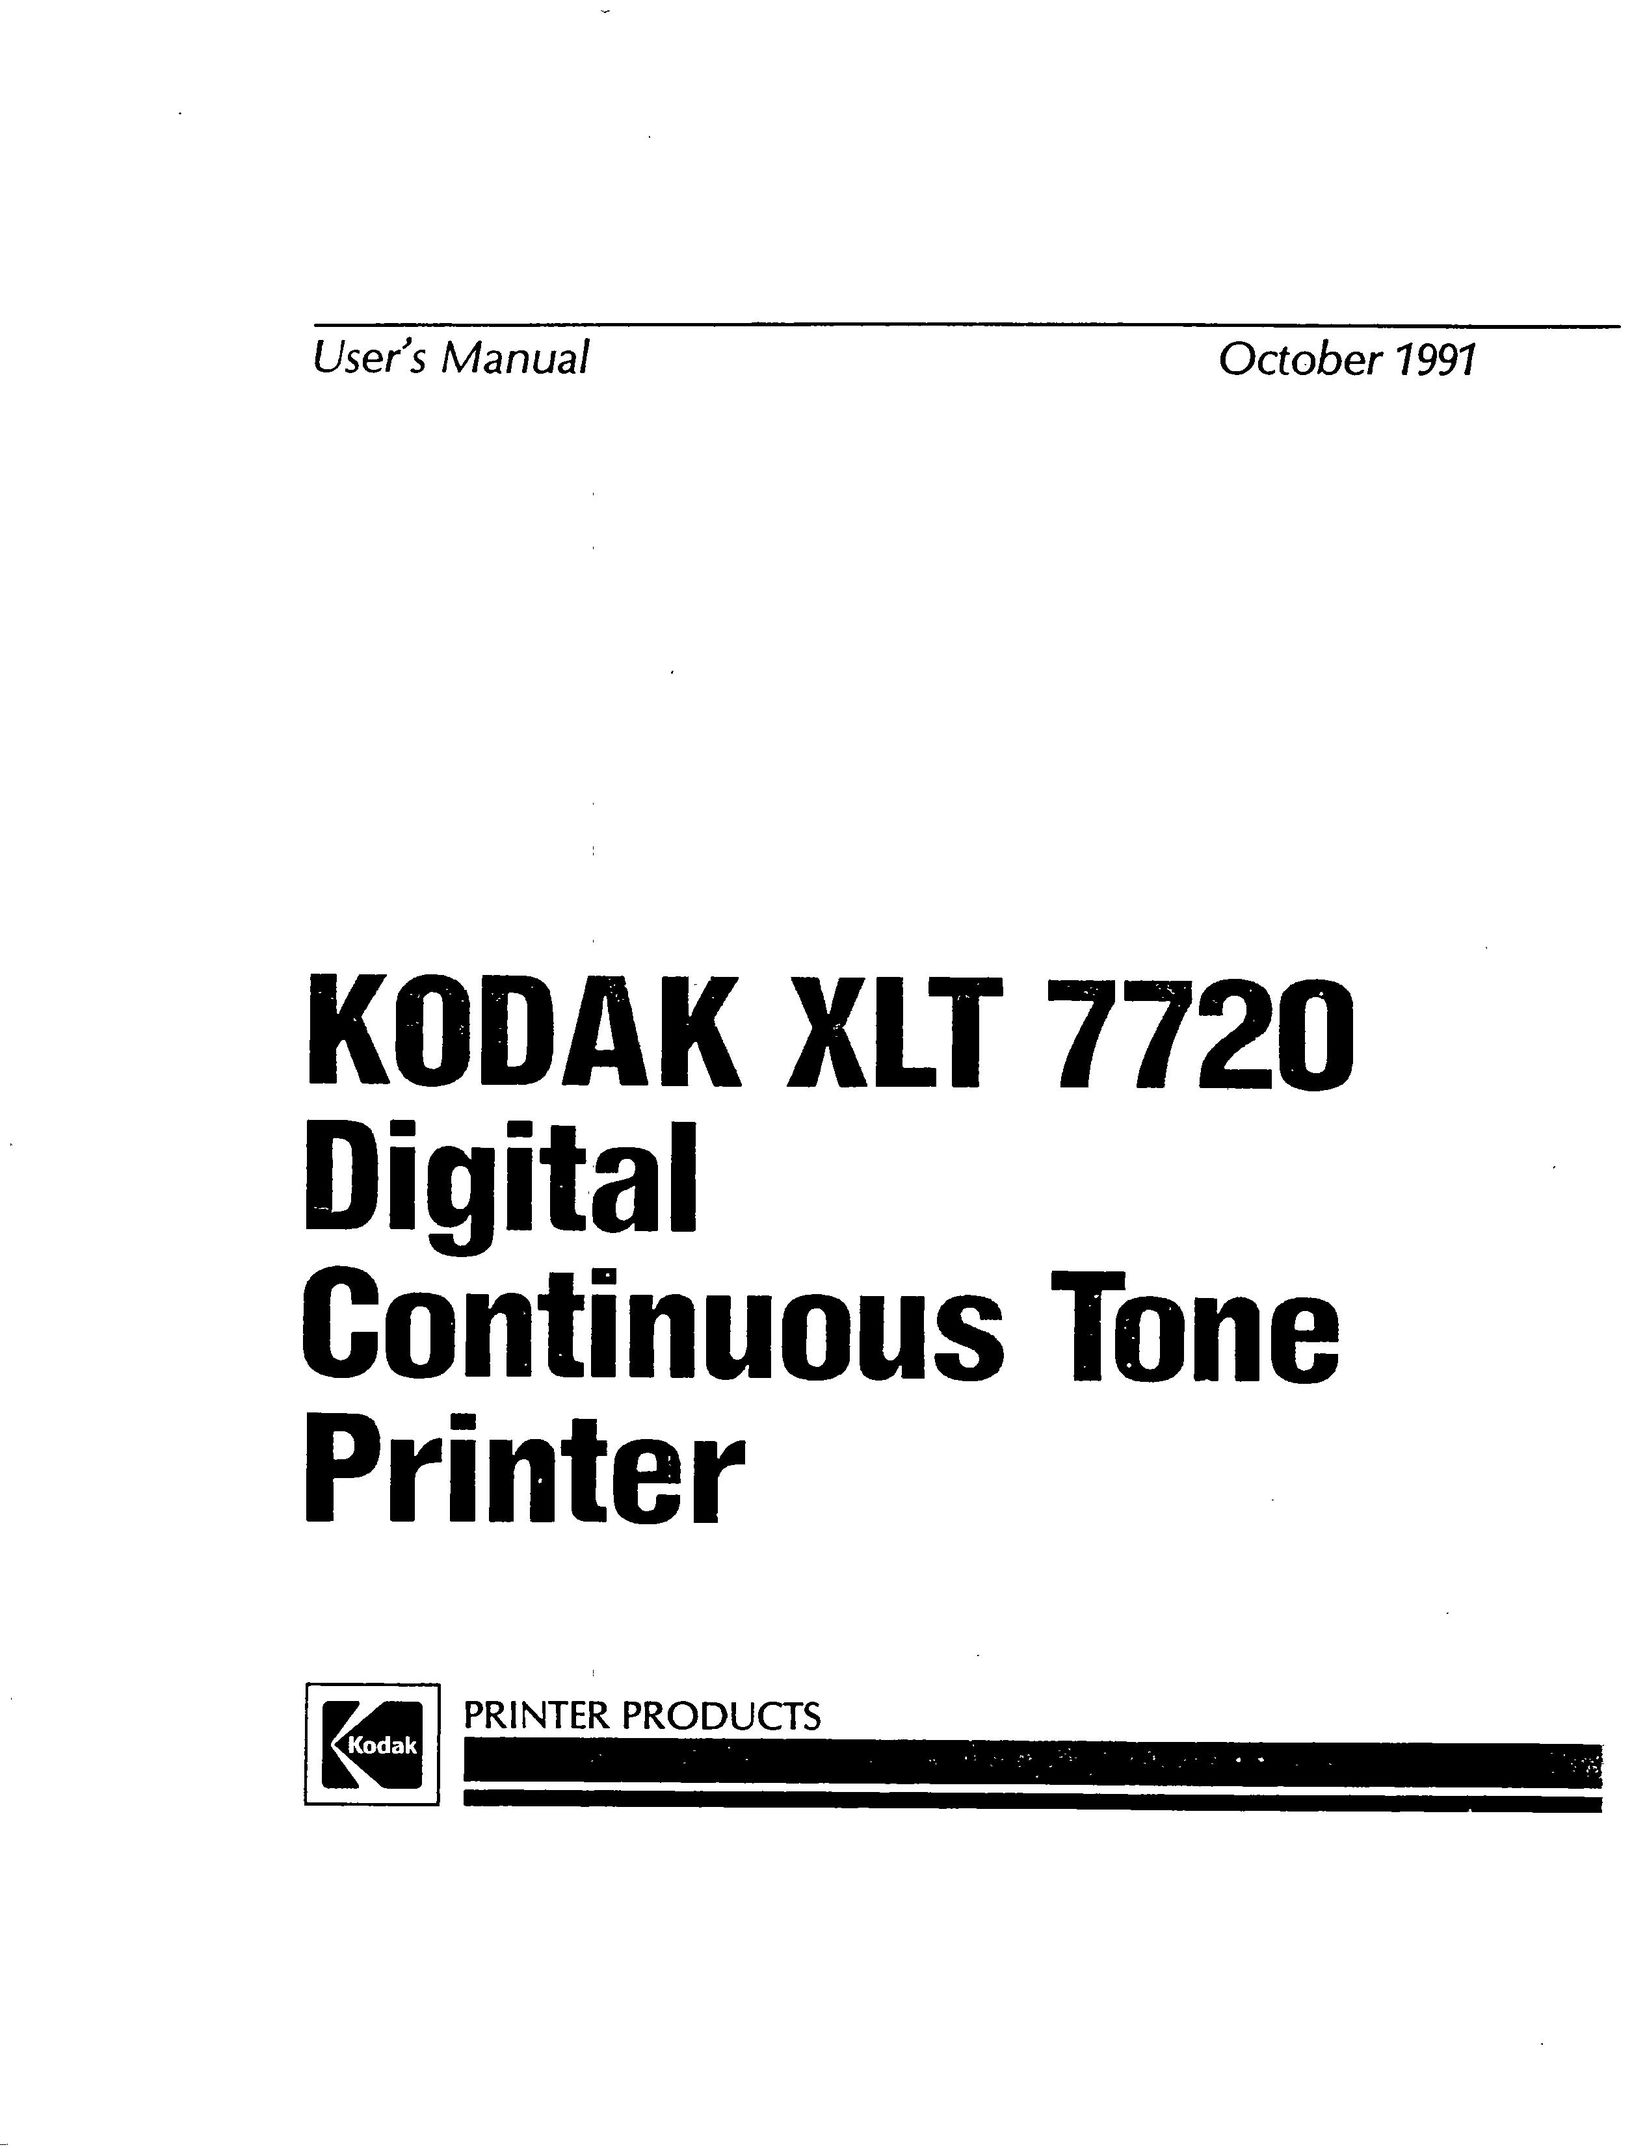 Kodak XLT 7720 Printer Accessories User Manual